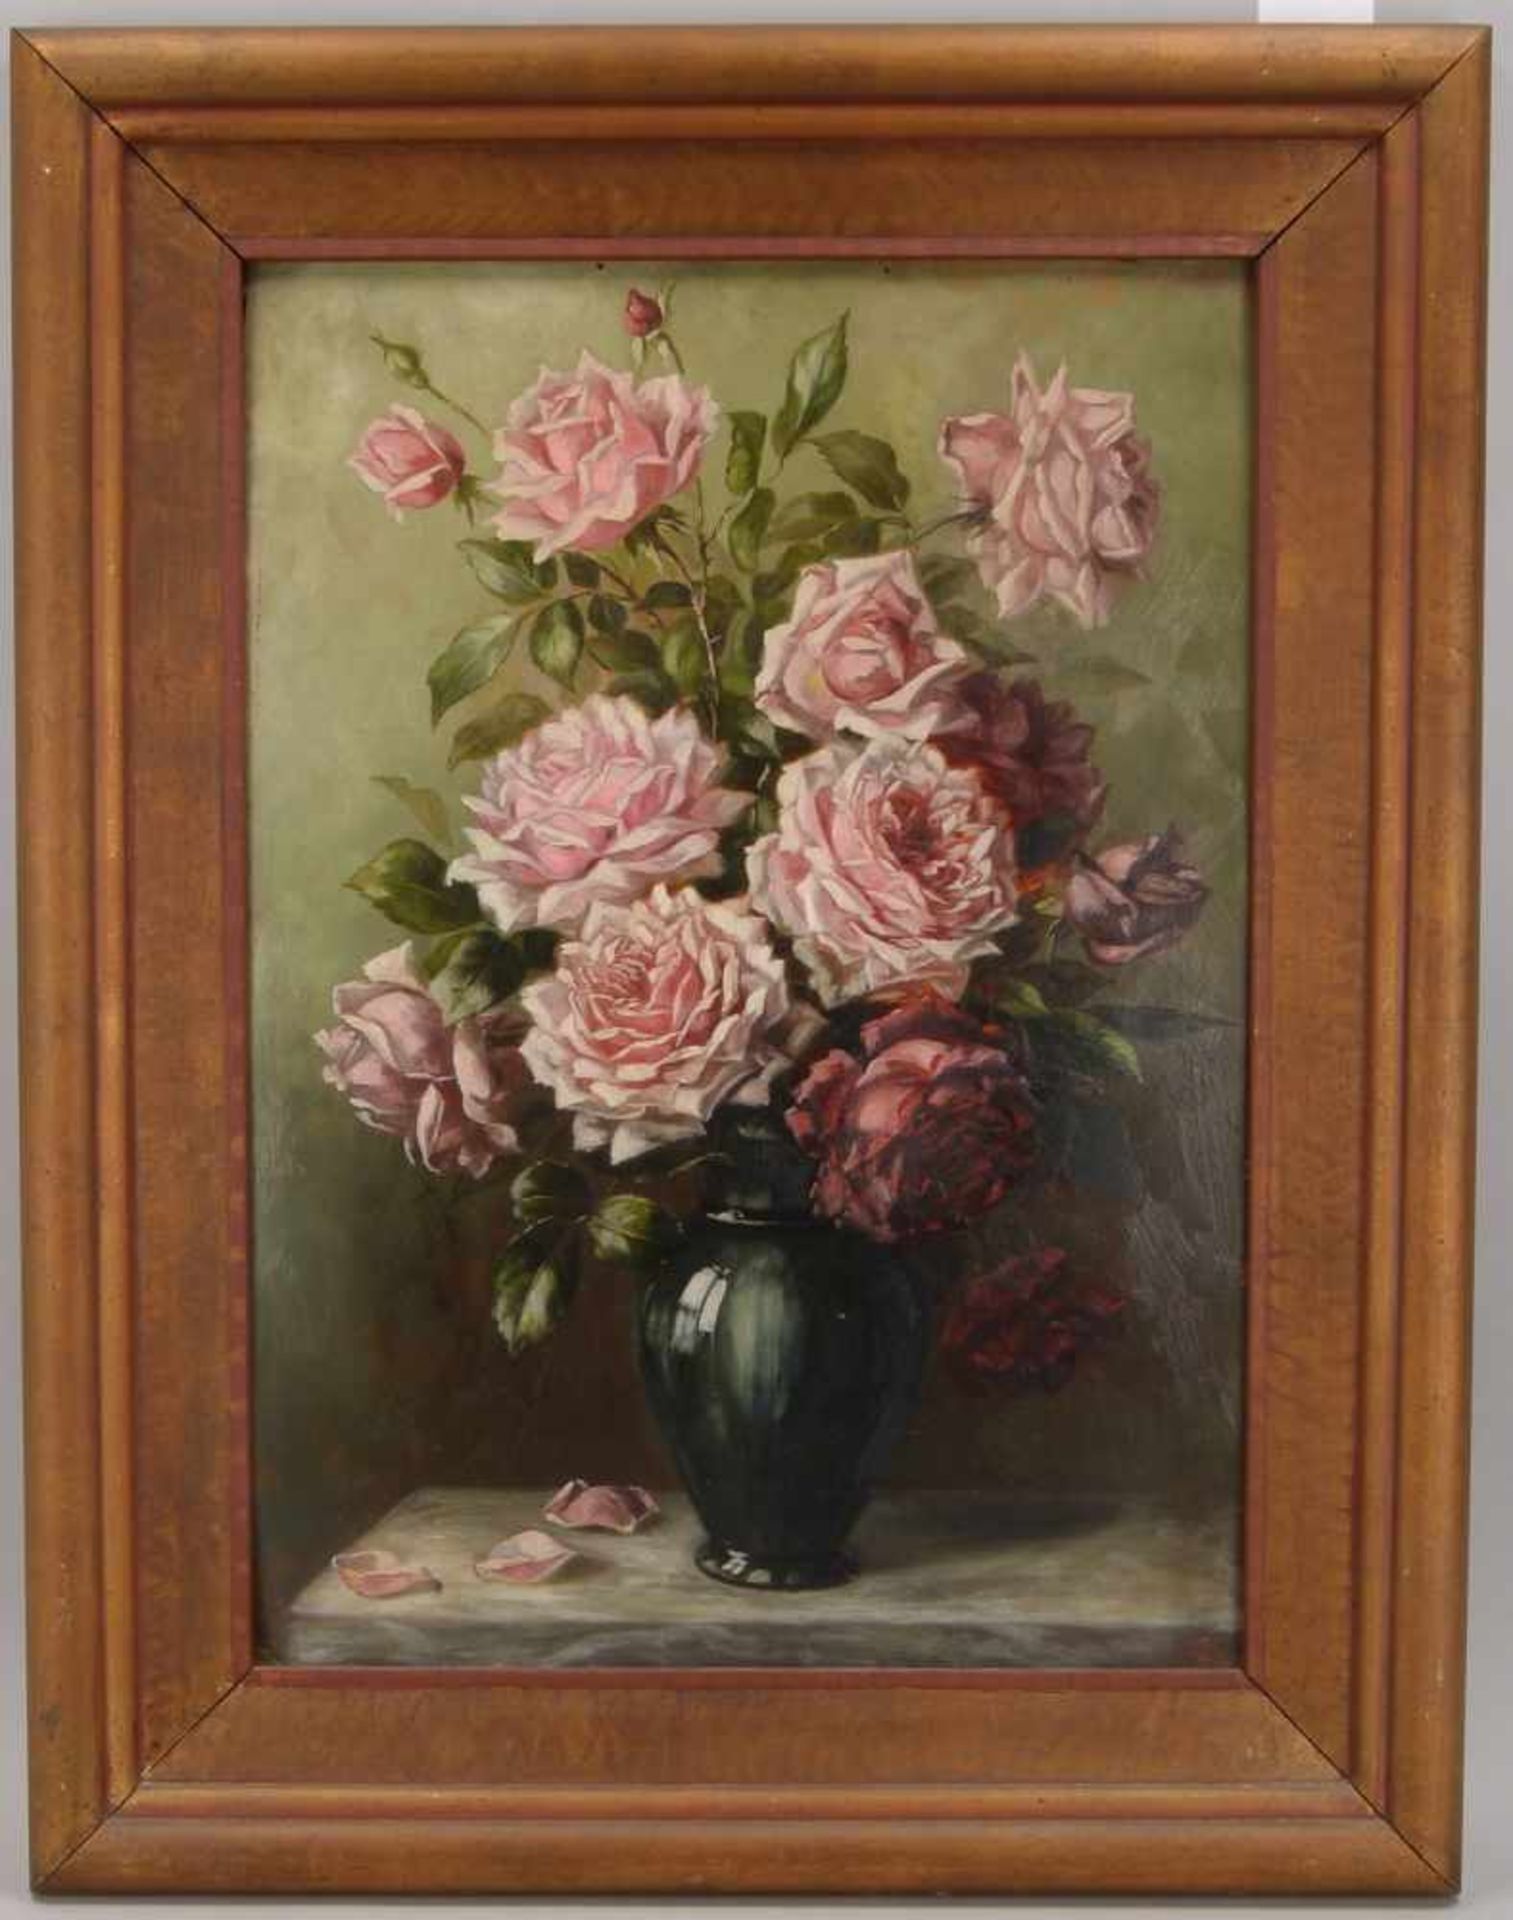 Haltnorth, Nadine, 'Rosen in Vase', Öl auf Malkarton/gerahmt; Bildmaße 69 x 49 cm, Rahmenmaße 89 x